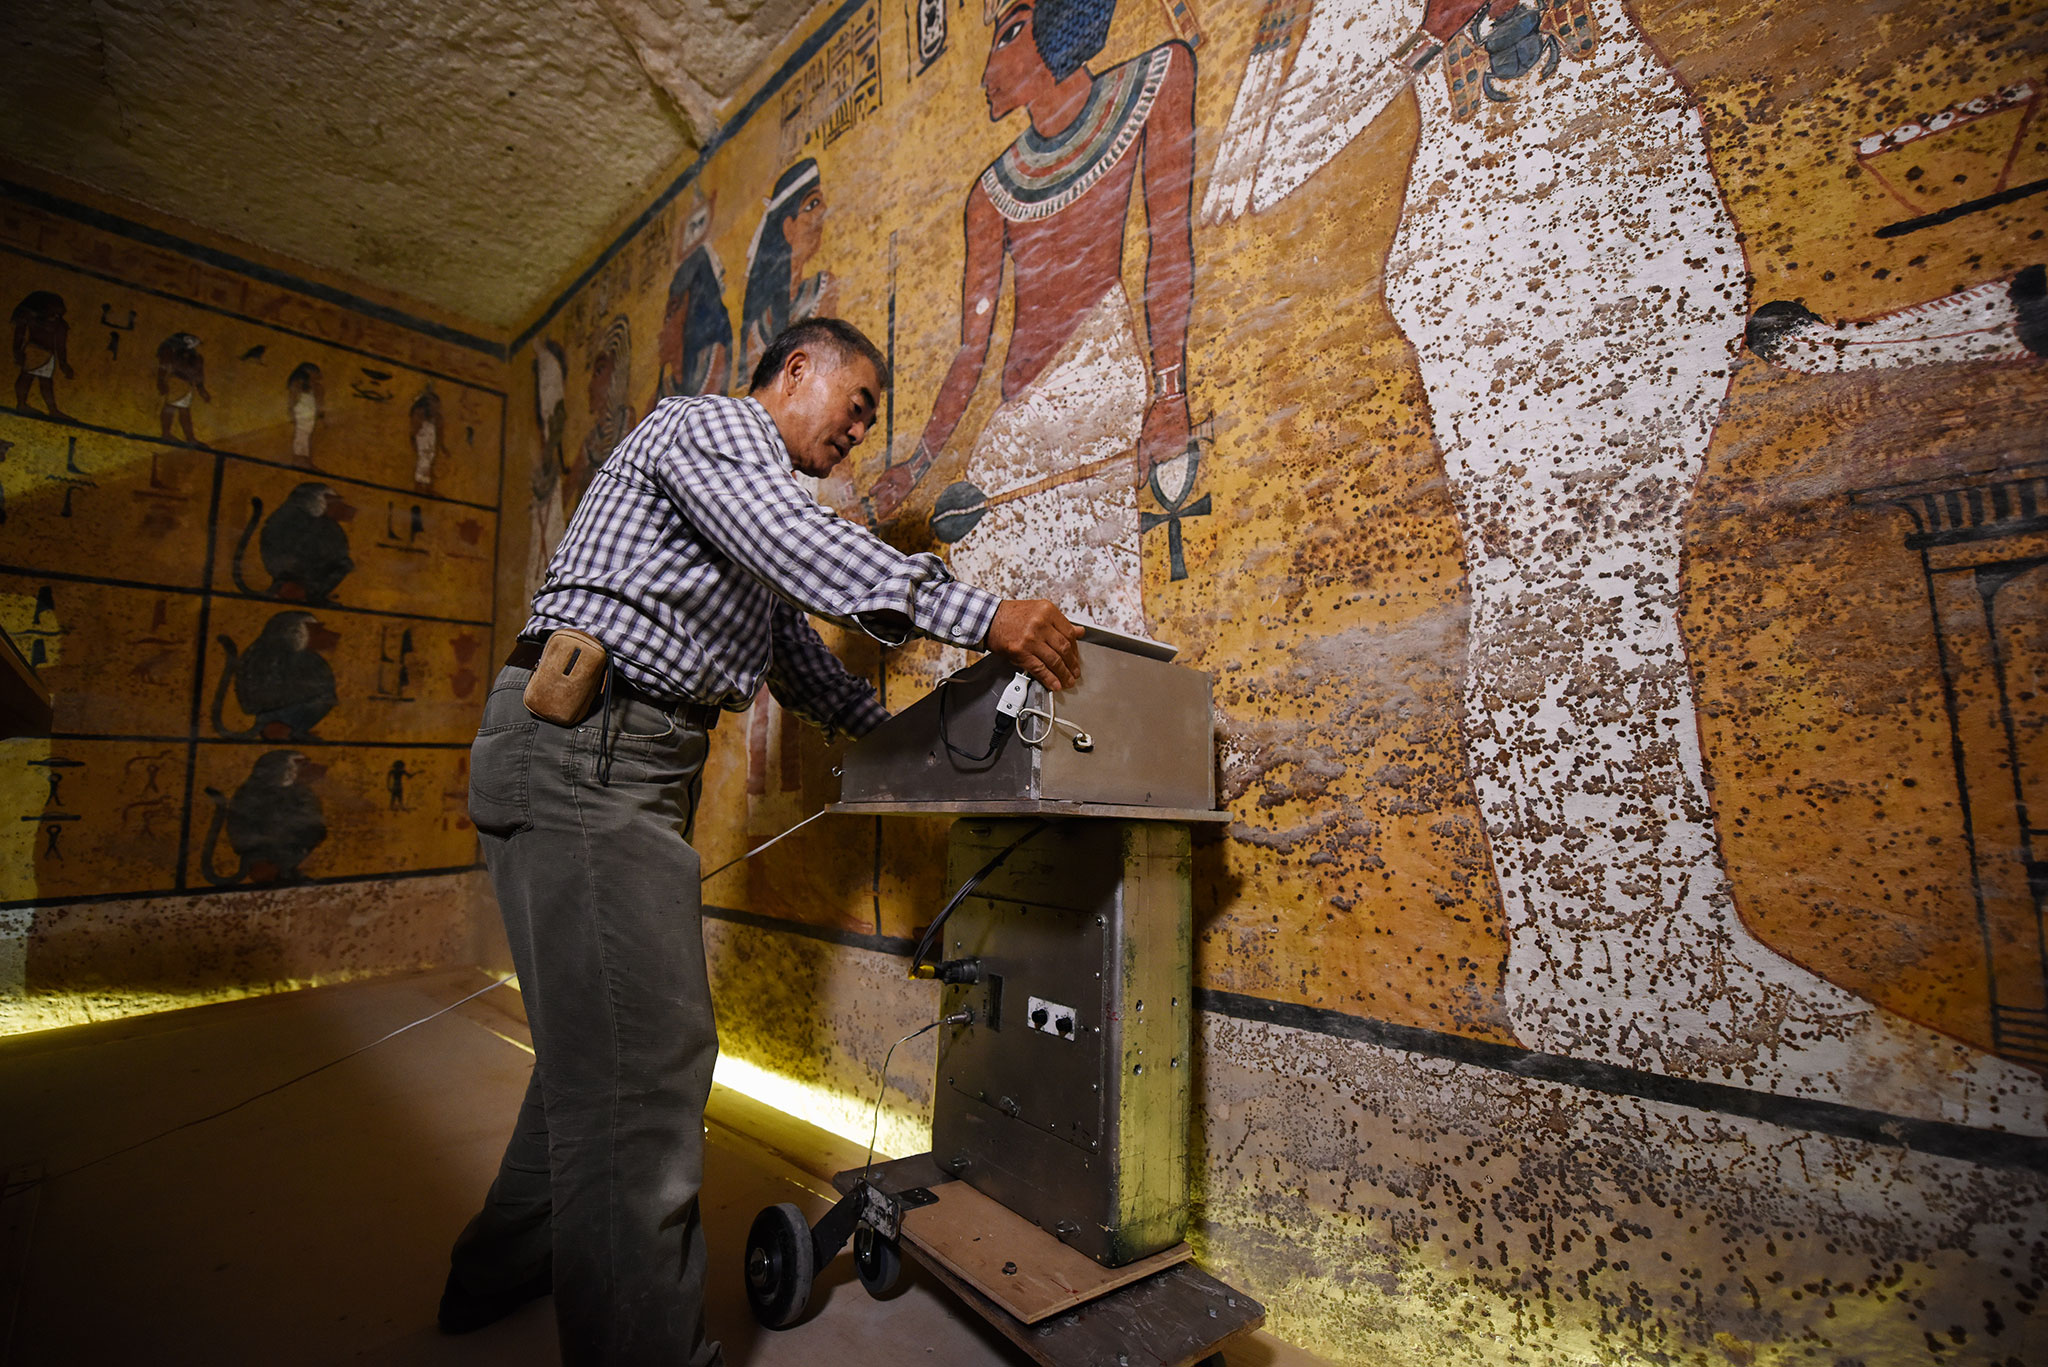 Radar Scans in King Tut's Tomb Suggest Hidden Chambers